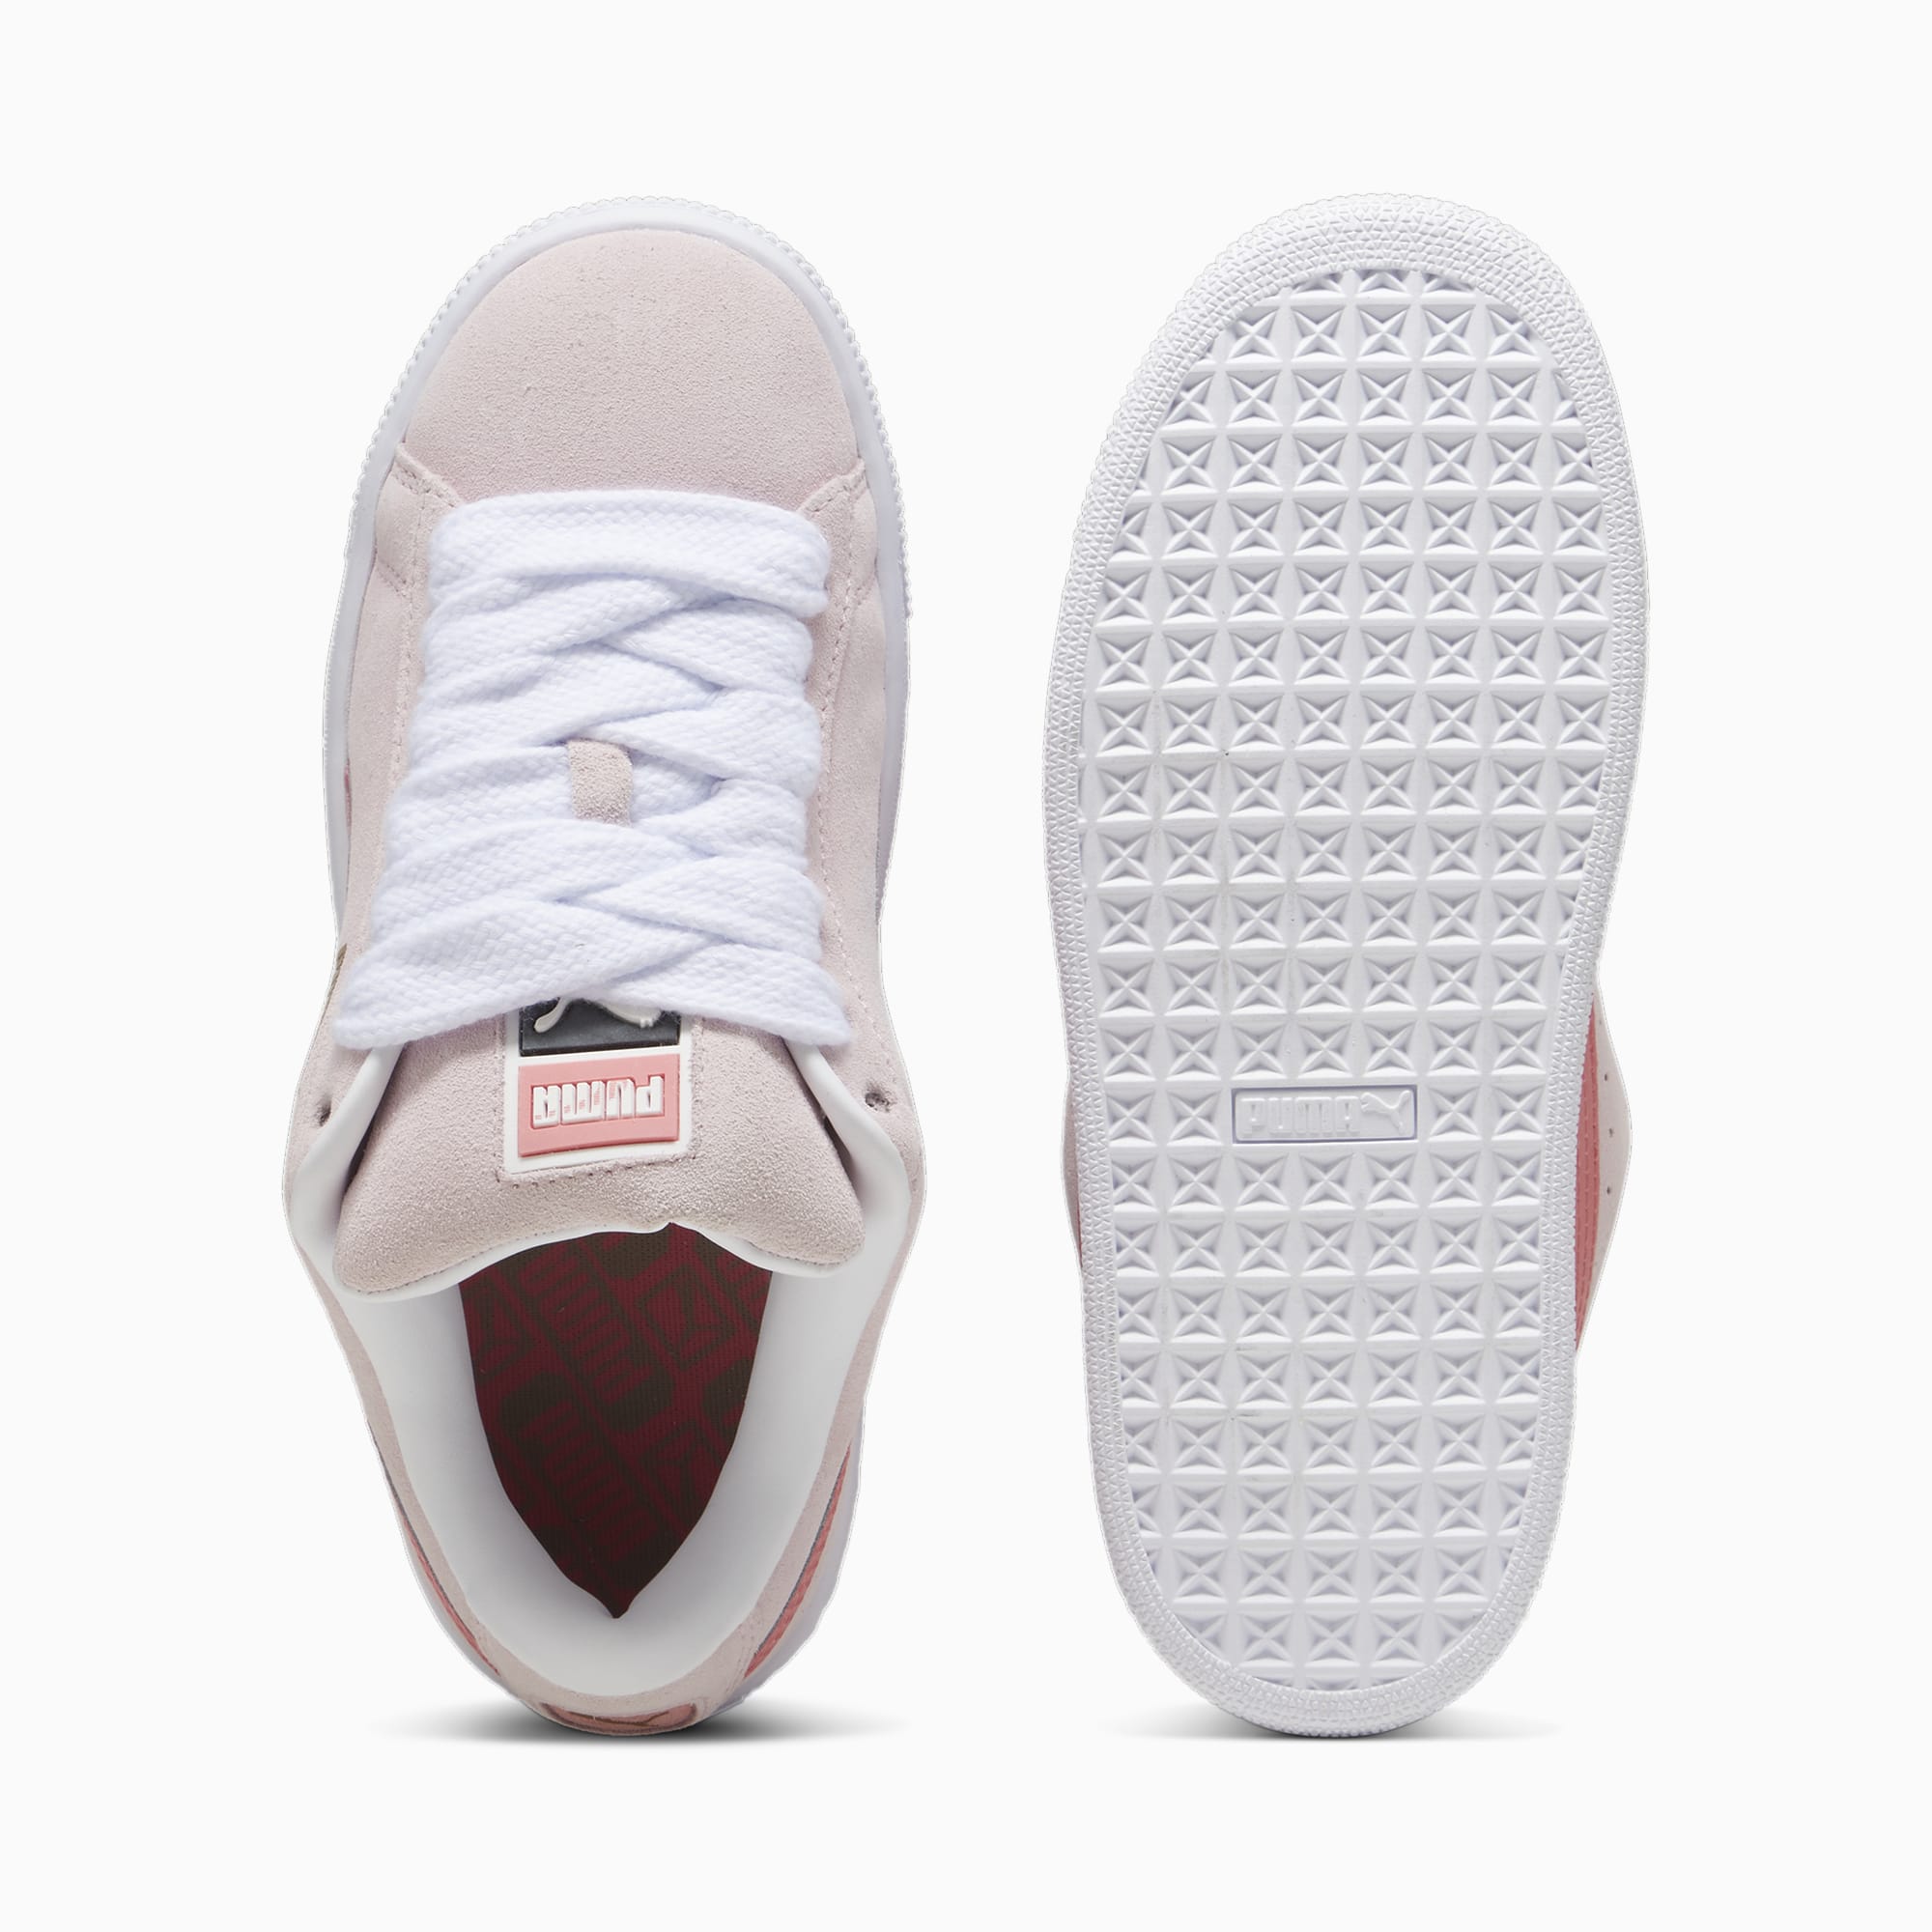 PUMA Suede XL Sneakers Teenager Schuhe, Weiß, Größe: 35.5, Schuhe